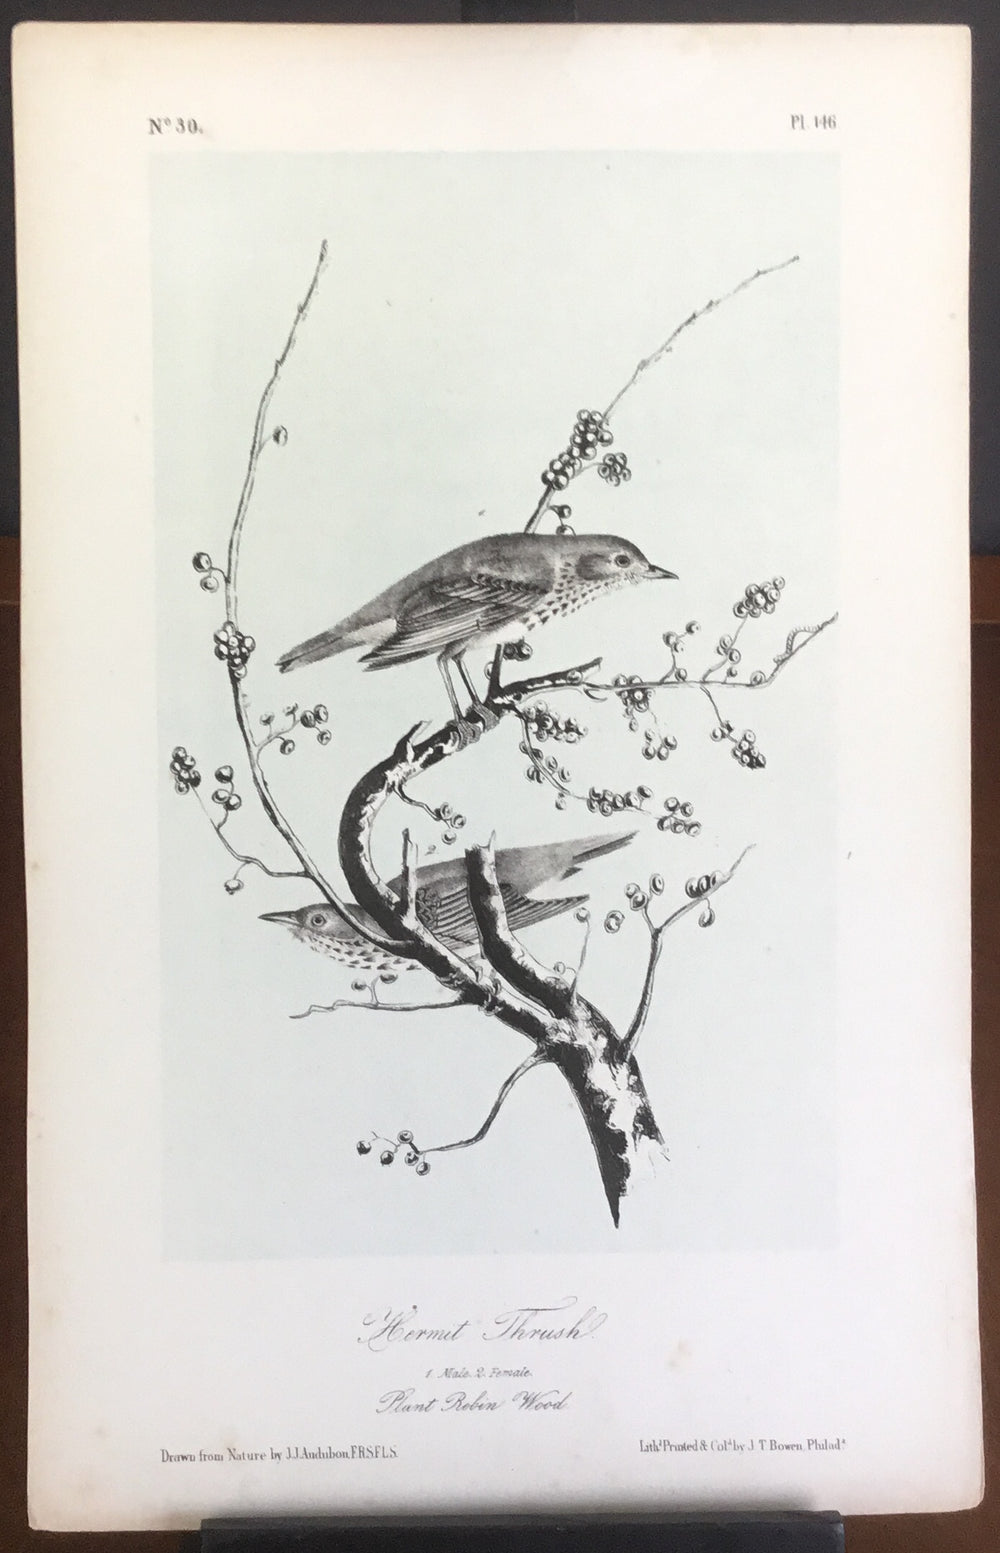 Audubon Octavo Hermit Thrush, plate 146, uncolored test sheet, 7 x 11